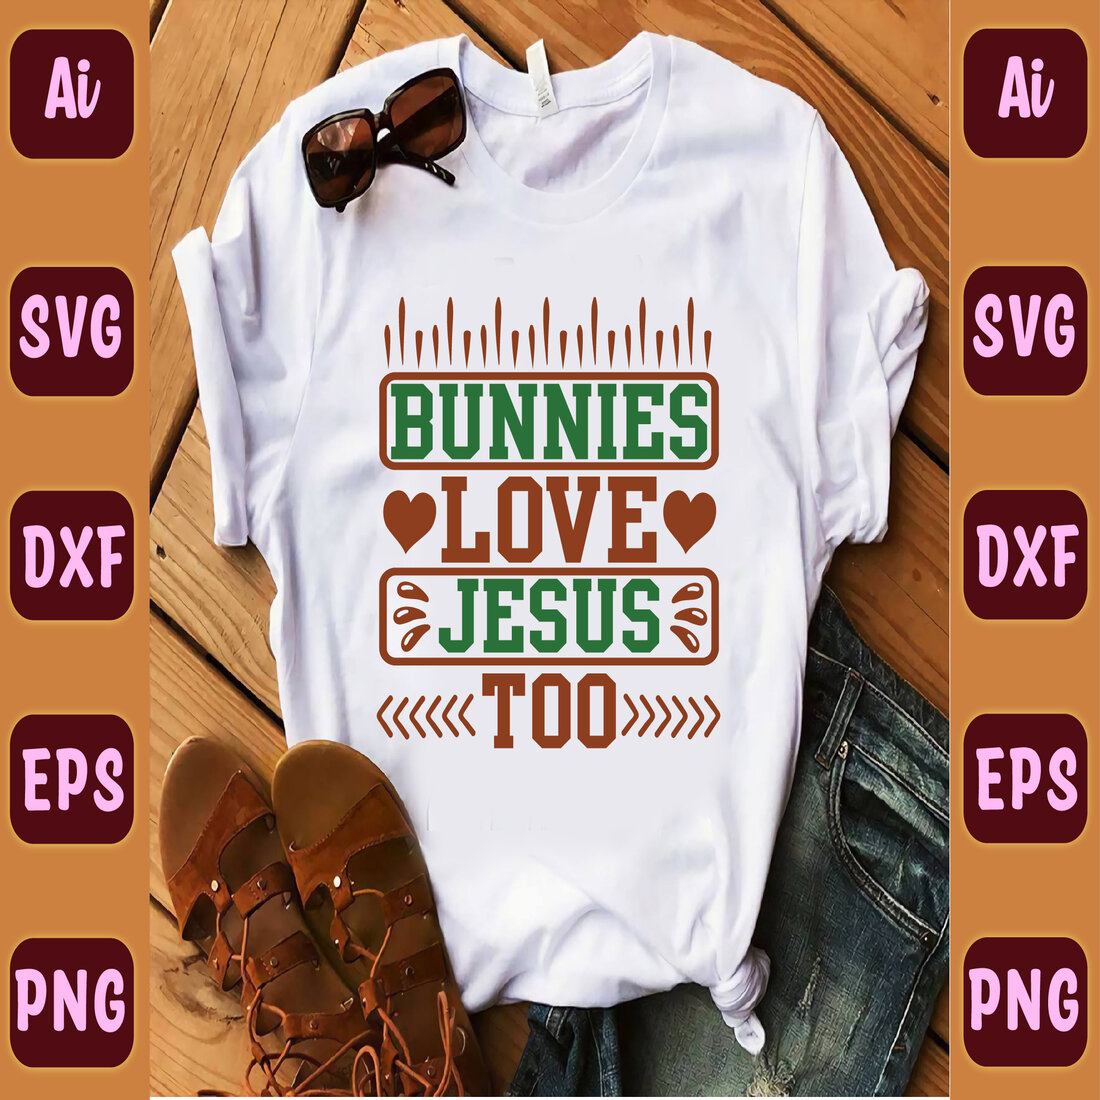 T - shirt that says bunnies love jesus too.